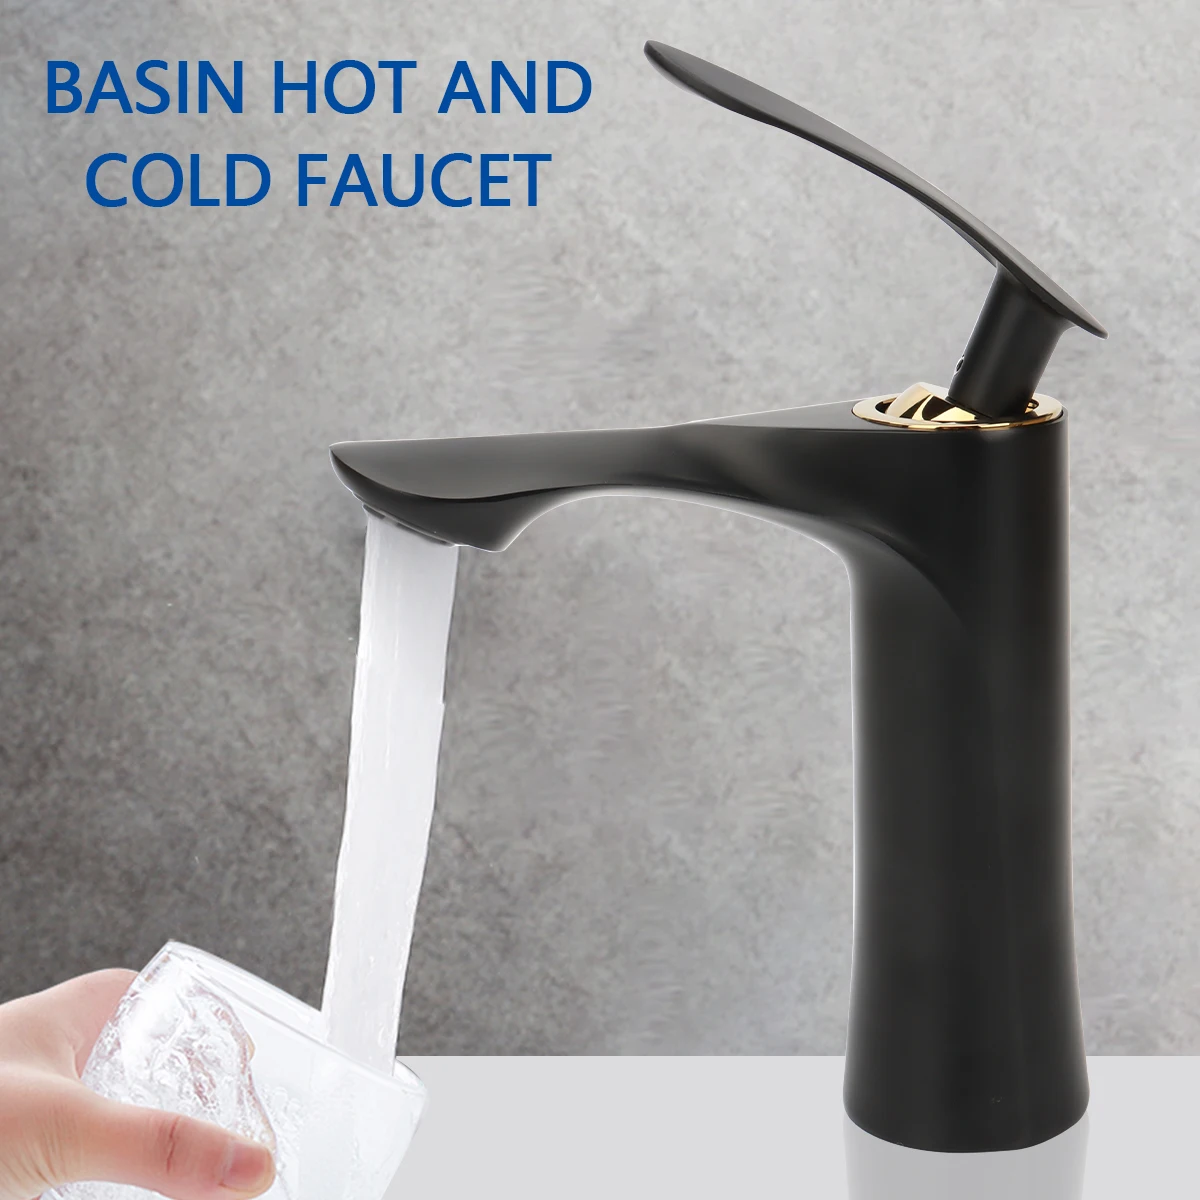 New Miami Mall Luxury Bathroom Faucet Black Basin unisex & Cold